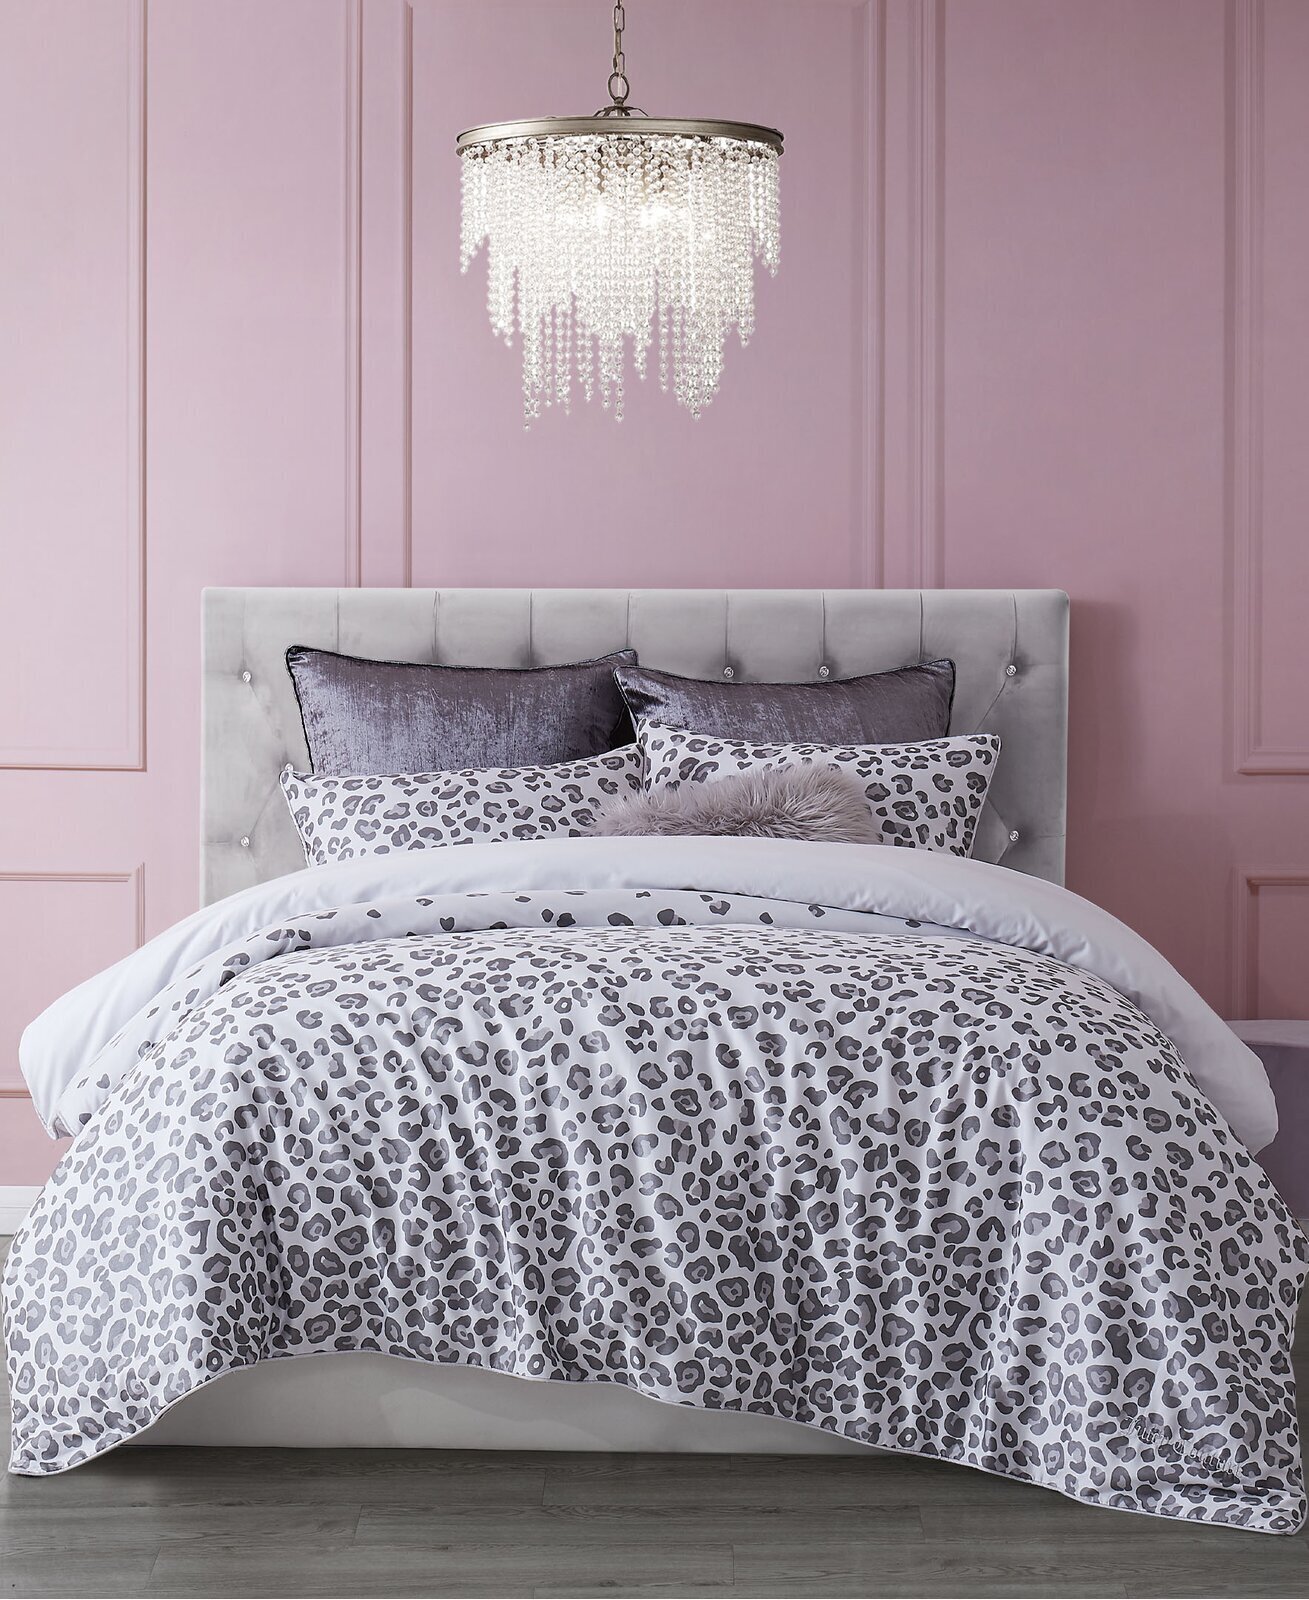 Elegant and Classy Leopard Bedspread